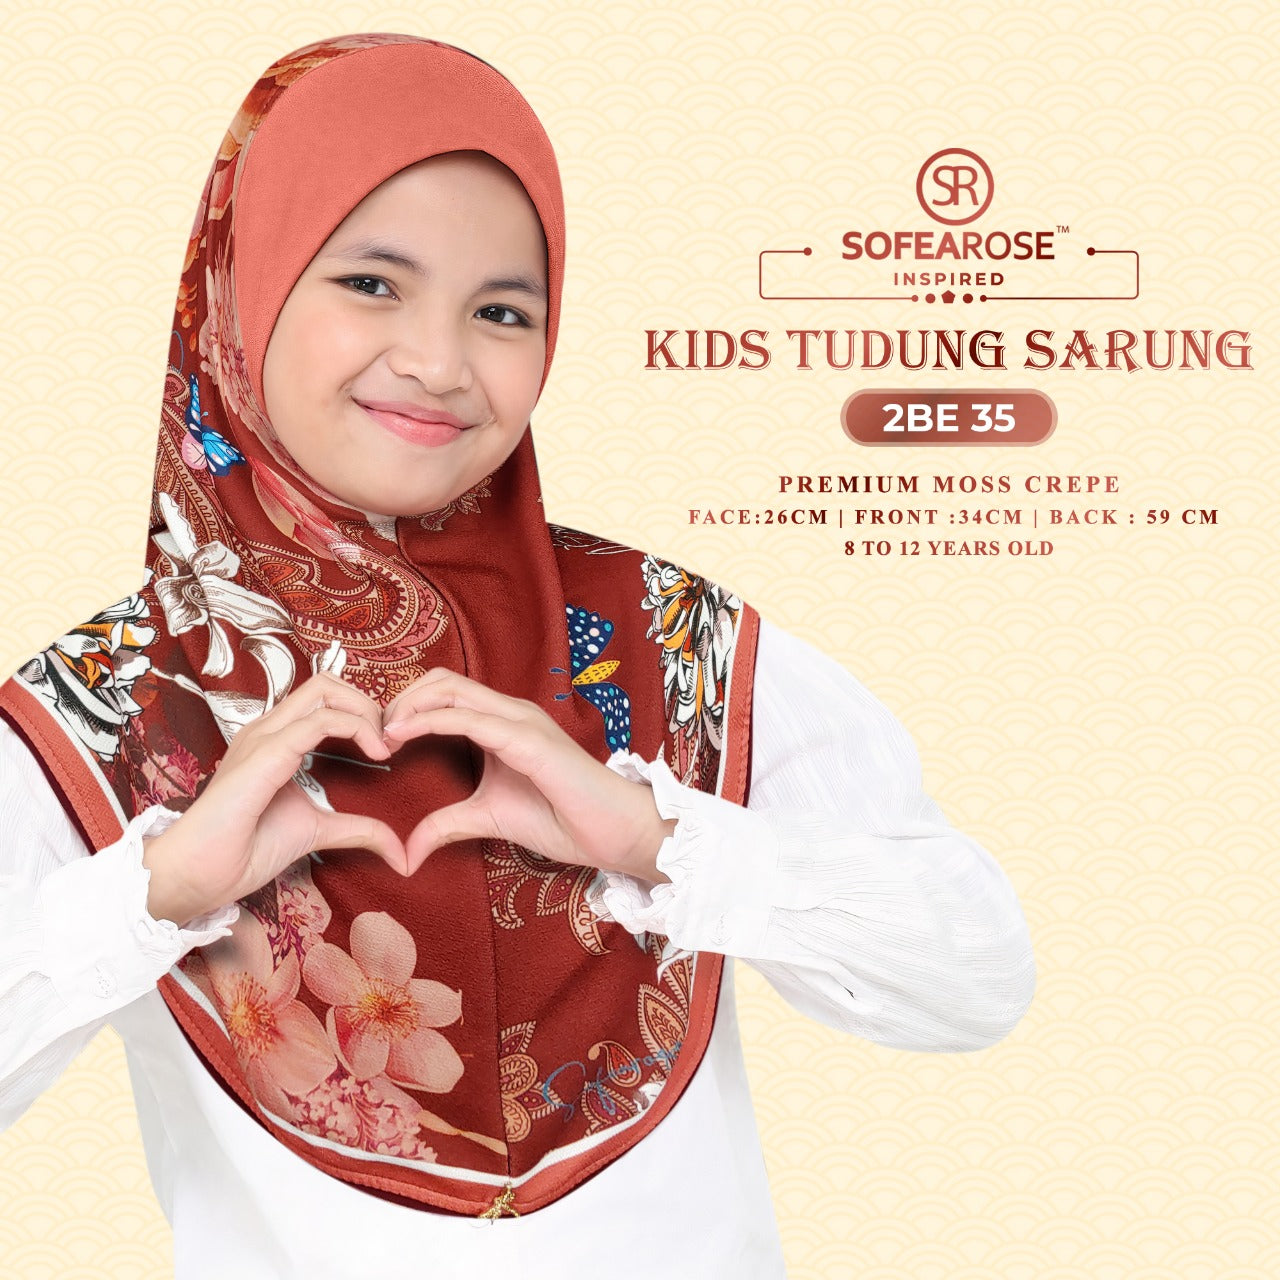 Sofearose Kid Tudung Sarung Collection RM9